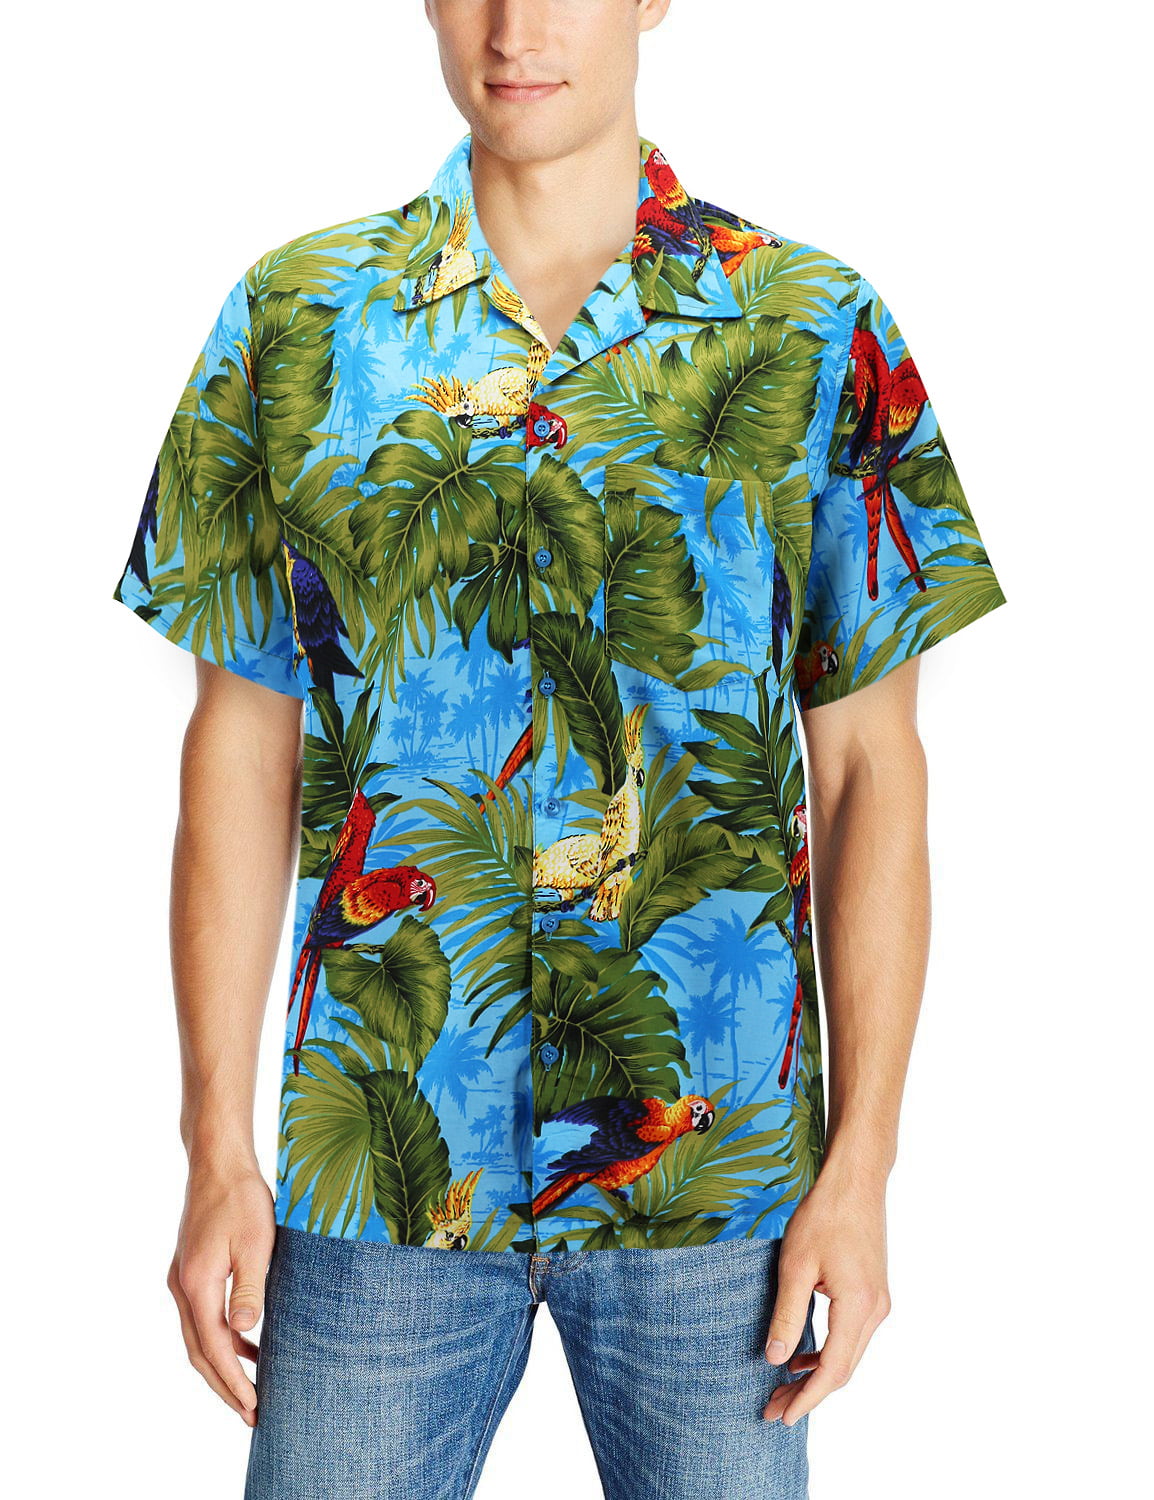 Vkwear Men S Casual Tropical Hawaiian Luau Aloha Revere Beach Button